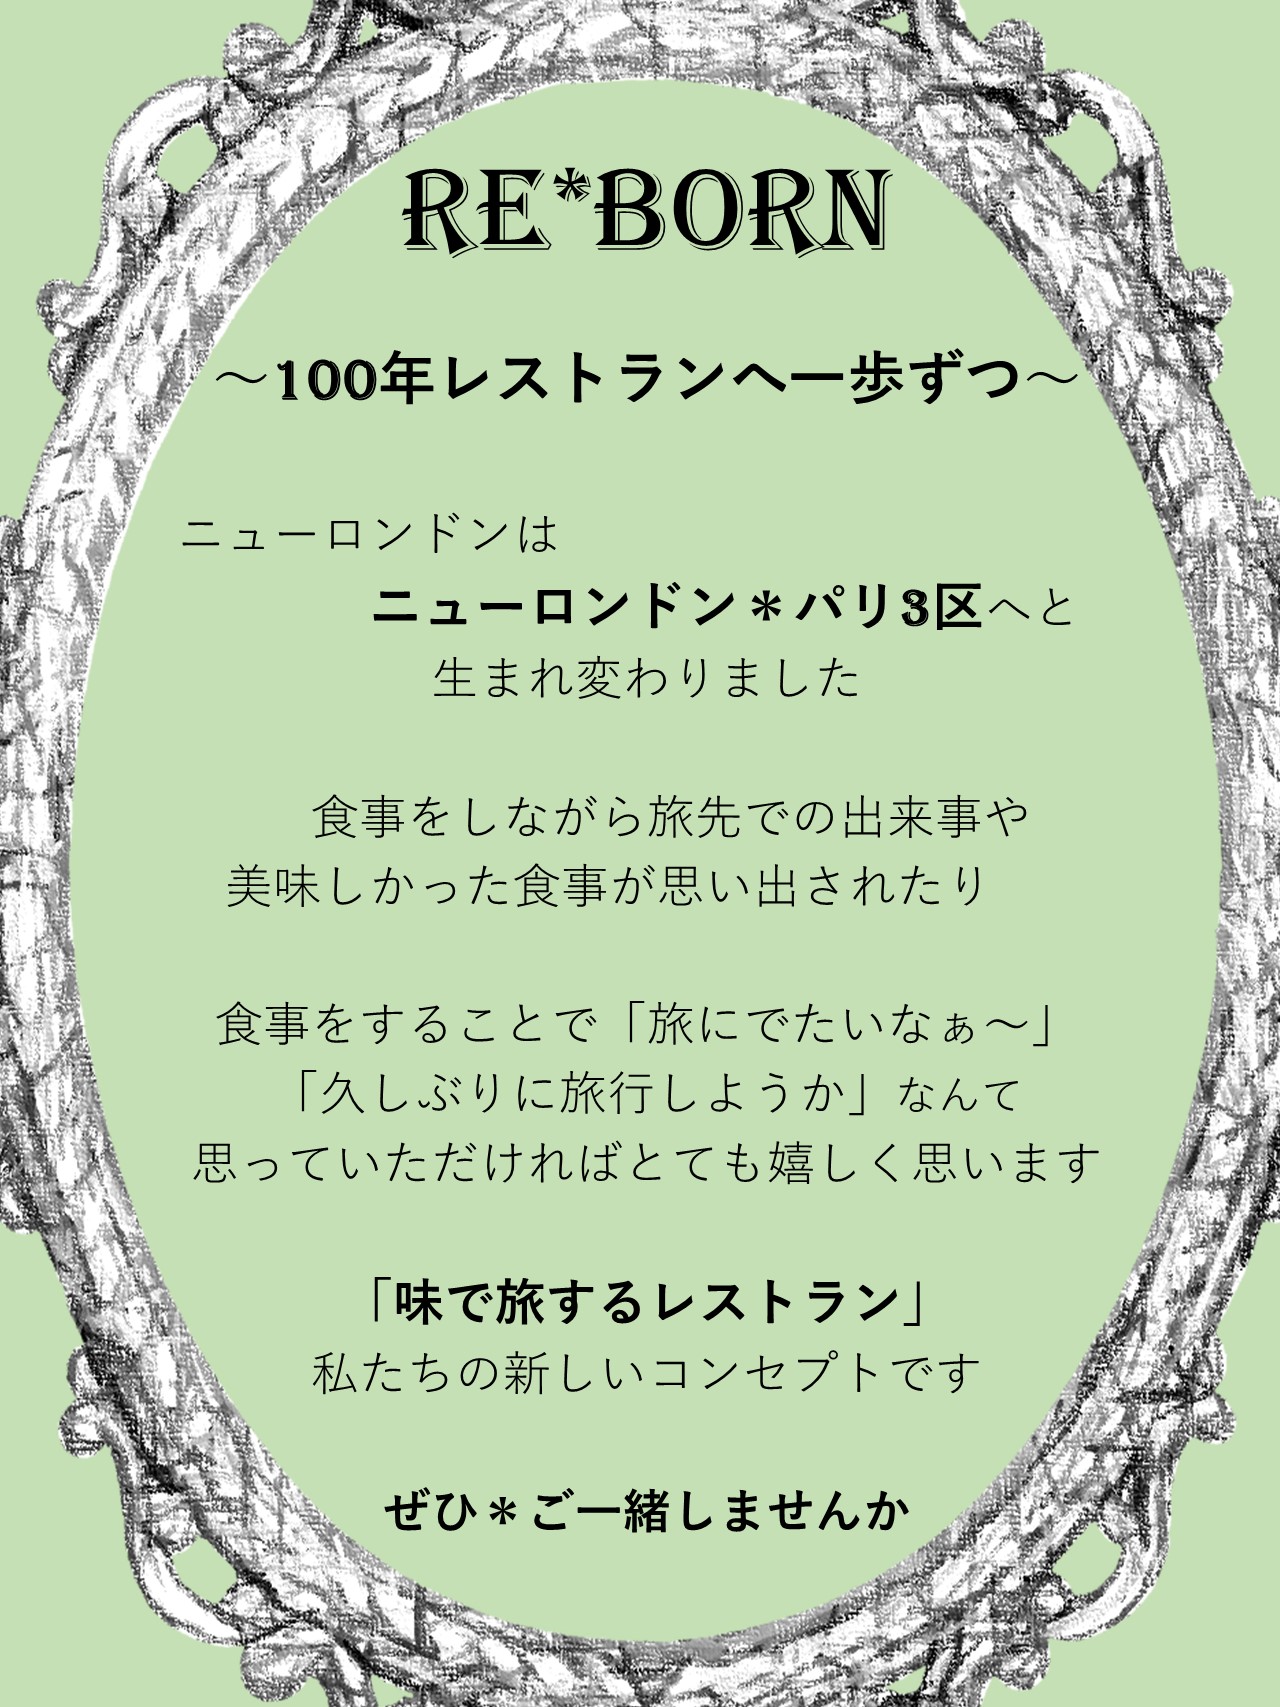 Re born挨拶文